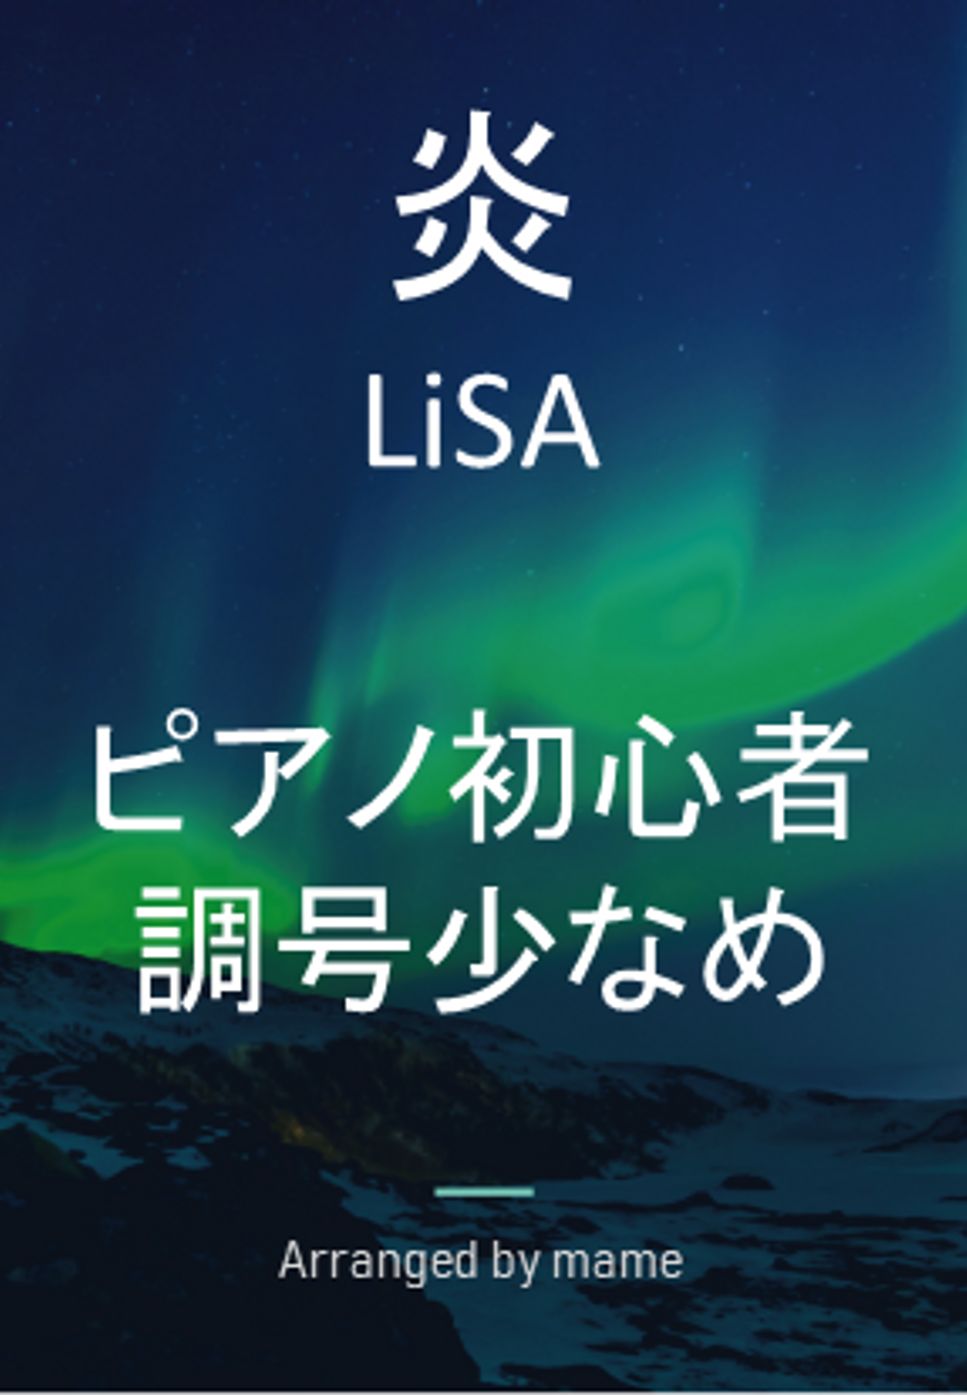 LiSA - 炎 (初心者 / 簡単キー) by mame